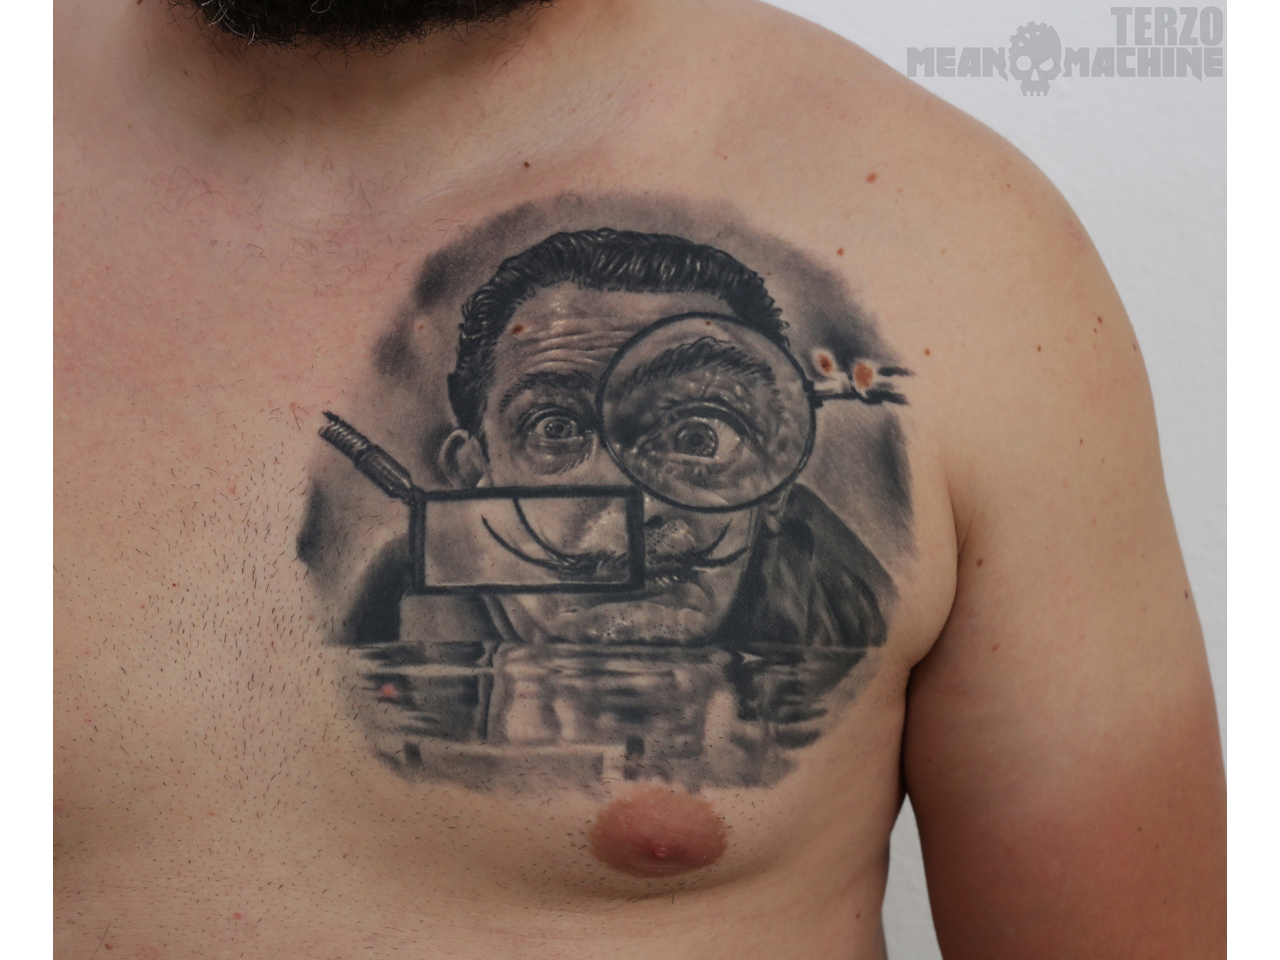 Photo 8 - MEAN MACHINE TATTOO Tattoo, piercing Belgrade